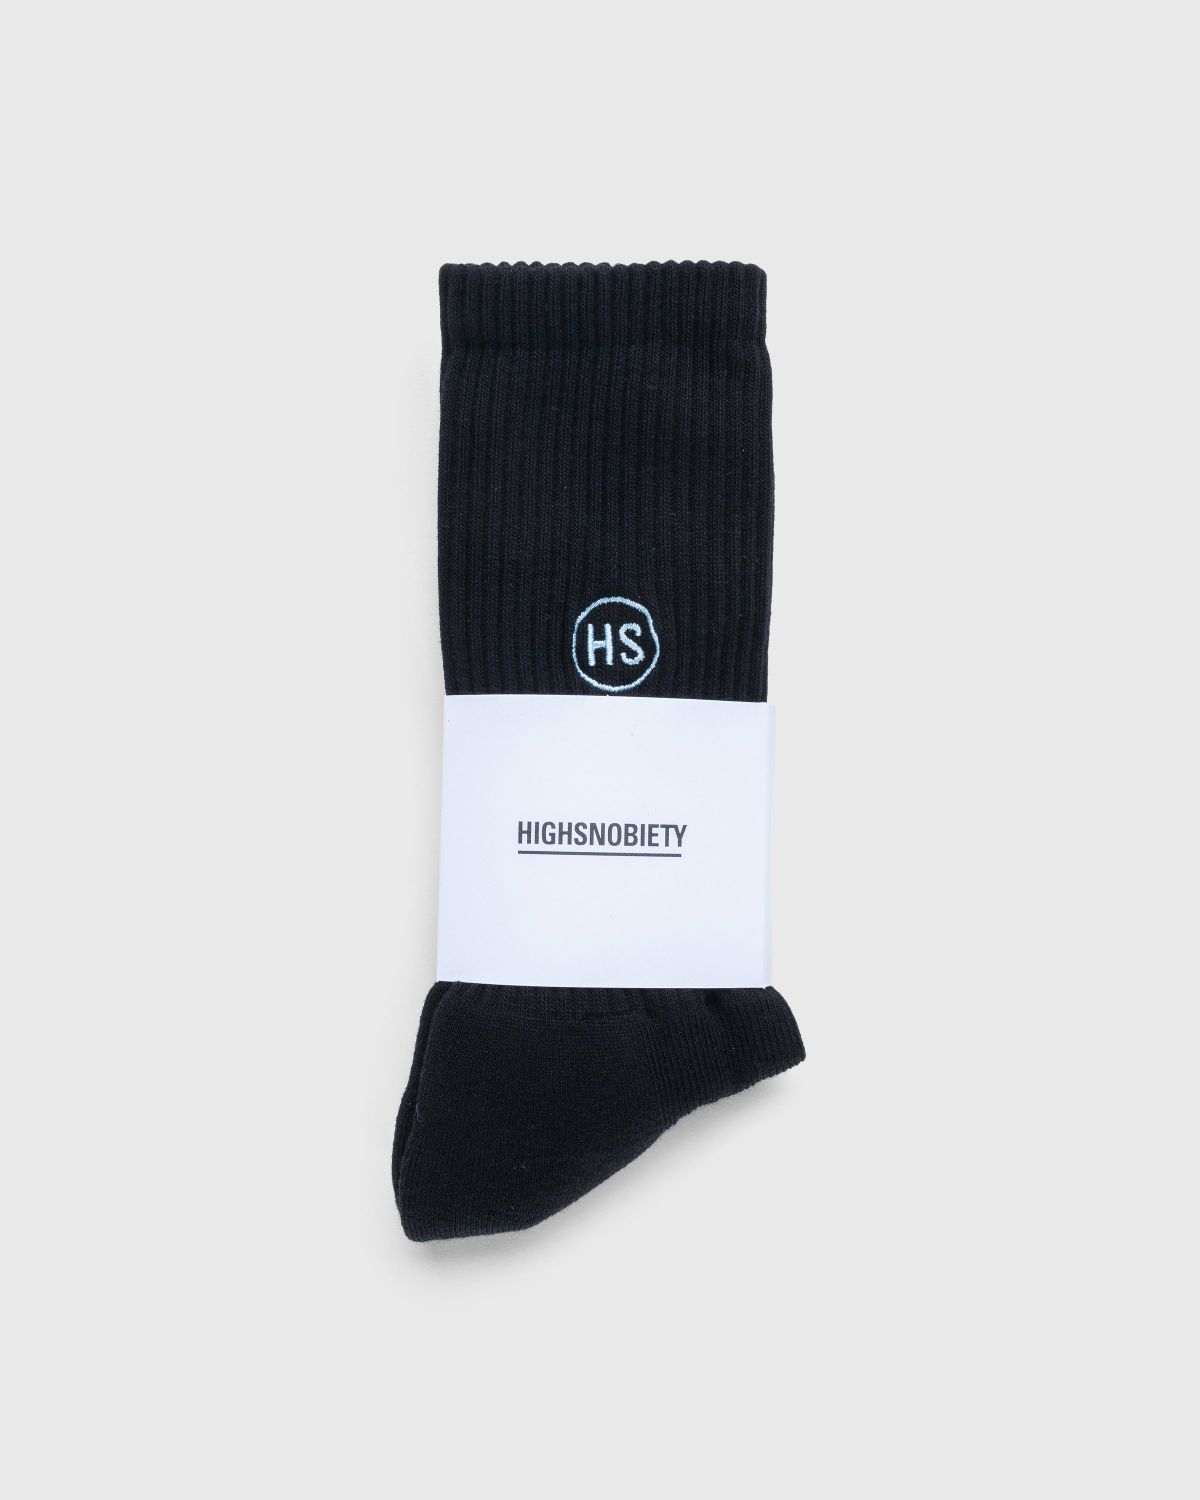 Highsnobiety – Logo Socks Black - Crew - Black - Image 1